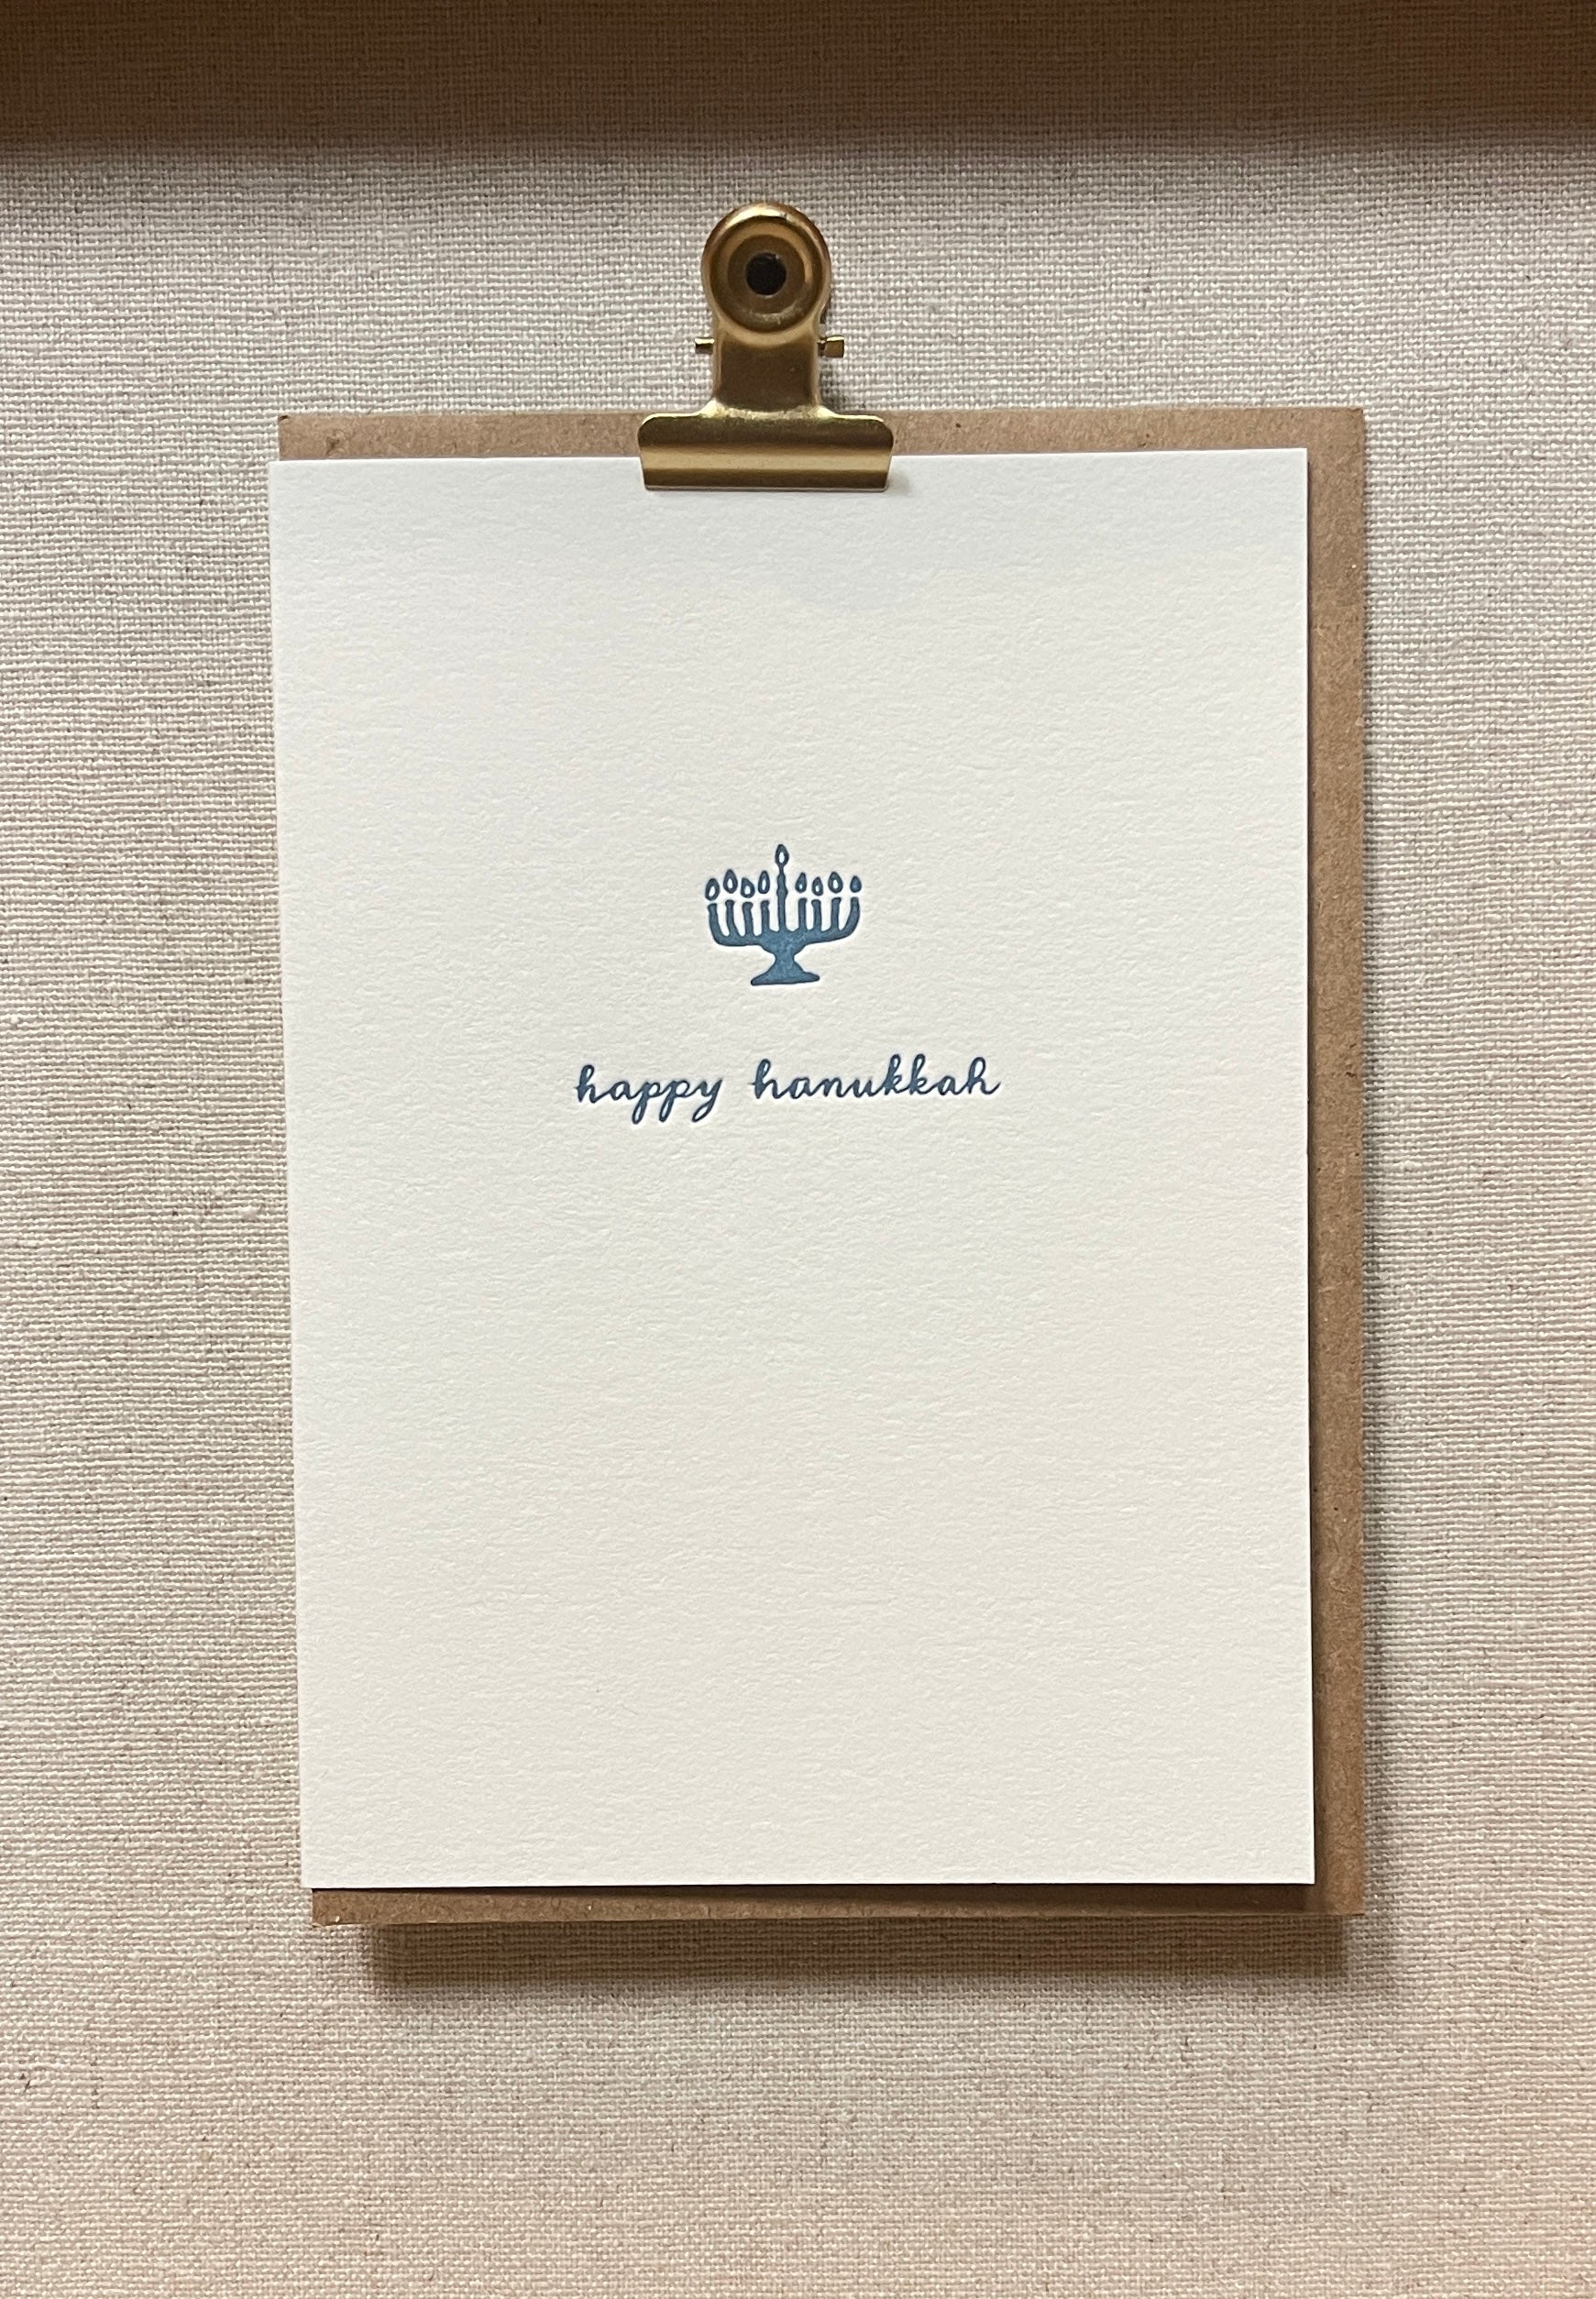 R.S.V.P. - Holiday Card | "Happy Hanukah"